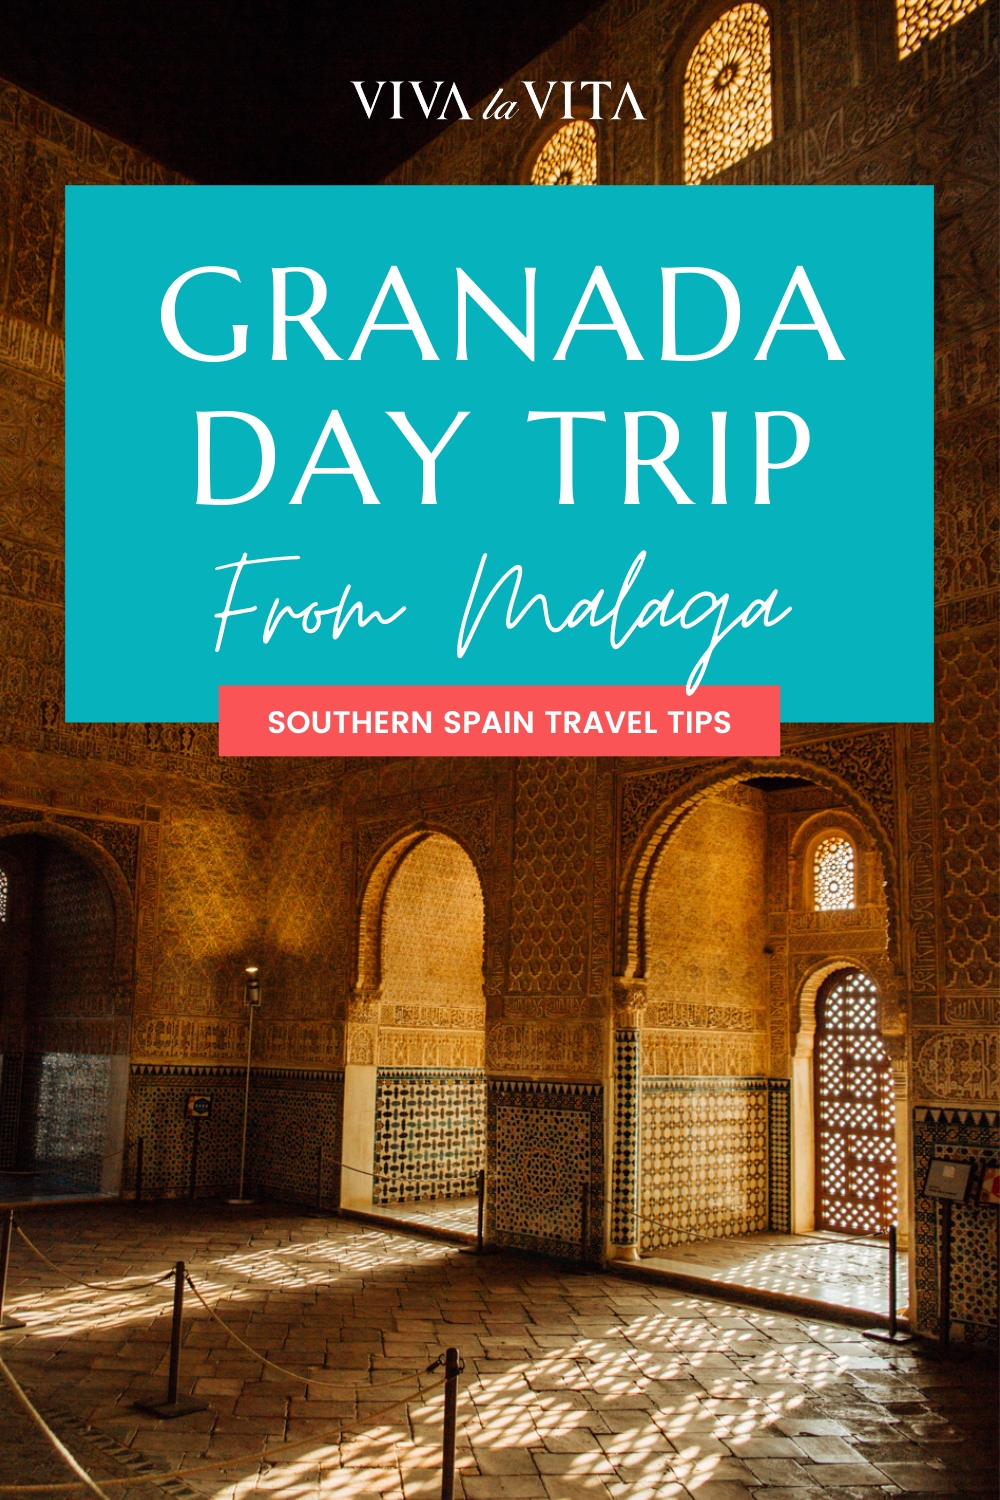 Day trip to Granada from Malaga, Spain